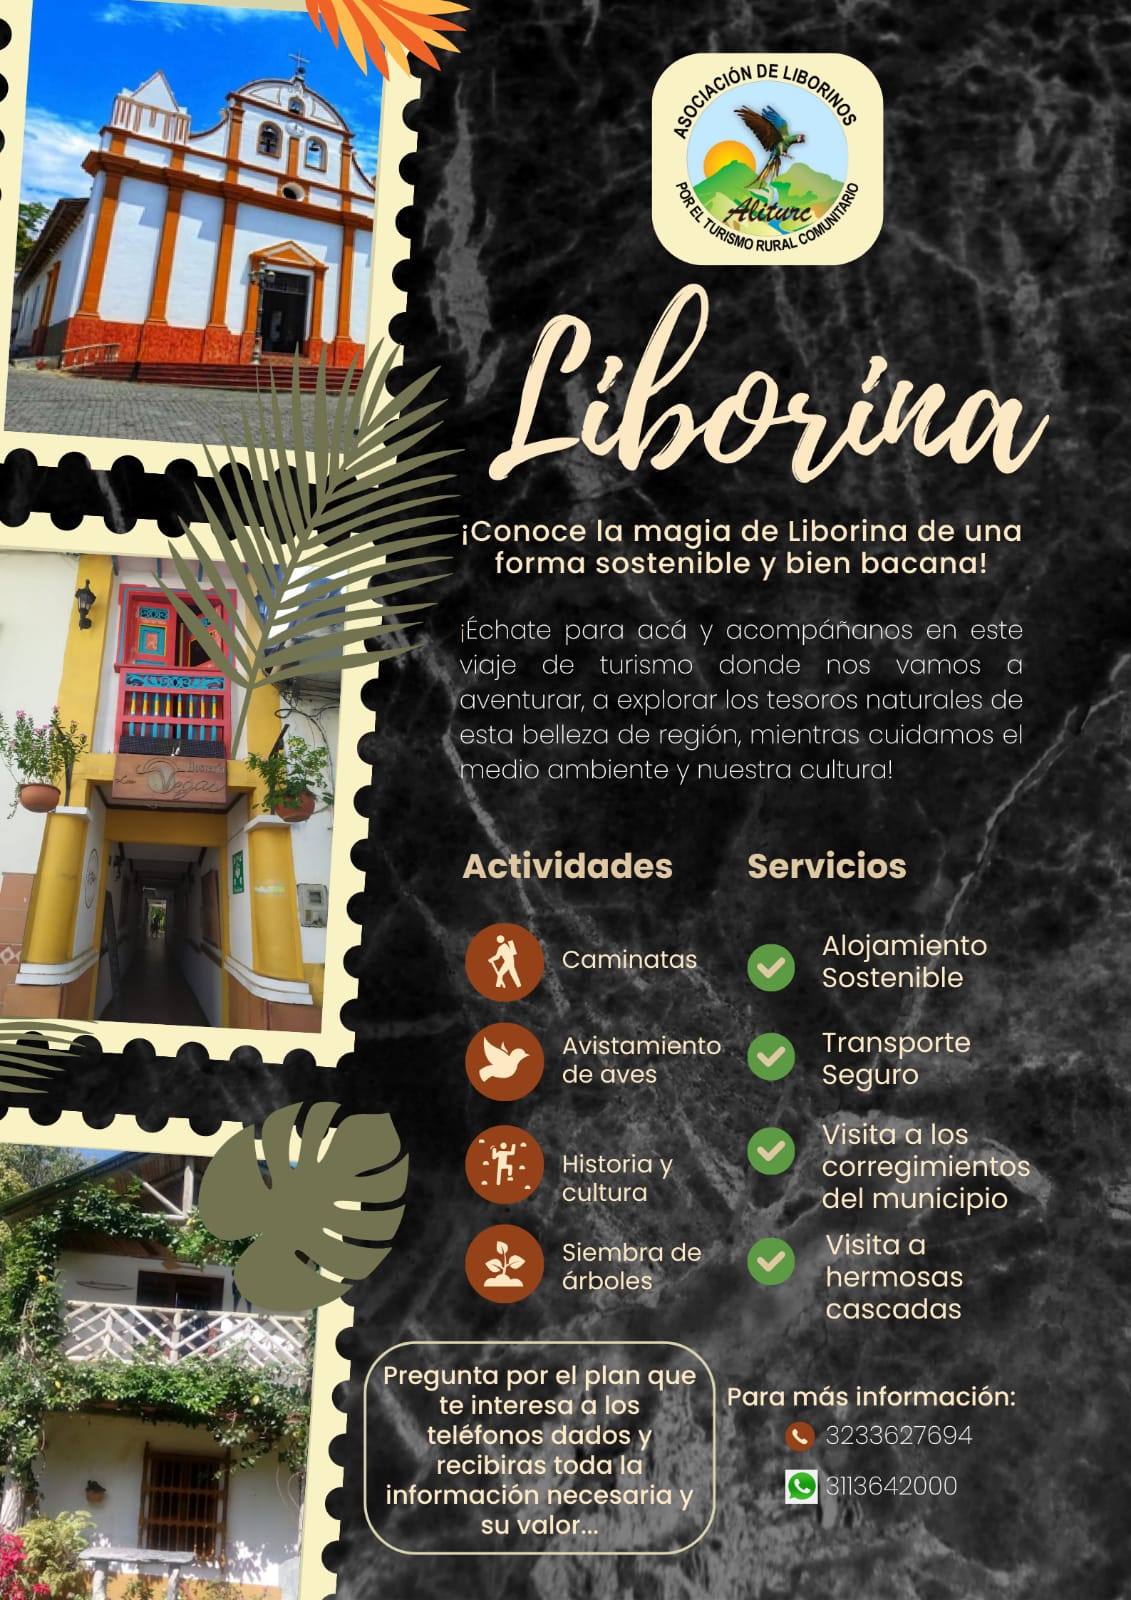 Servicios varios de turismo en Liborina, Antioquía.